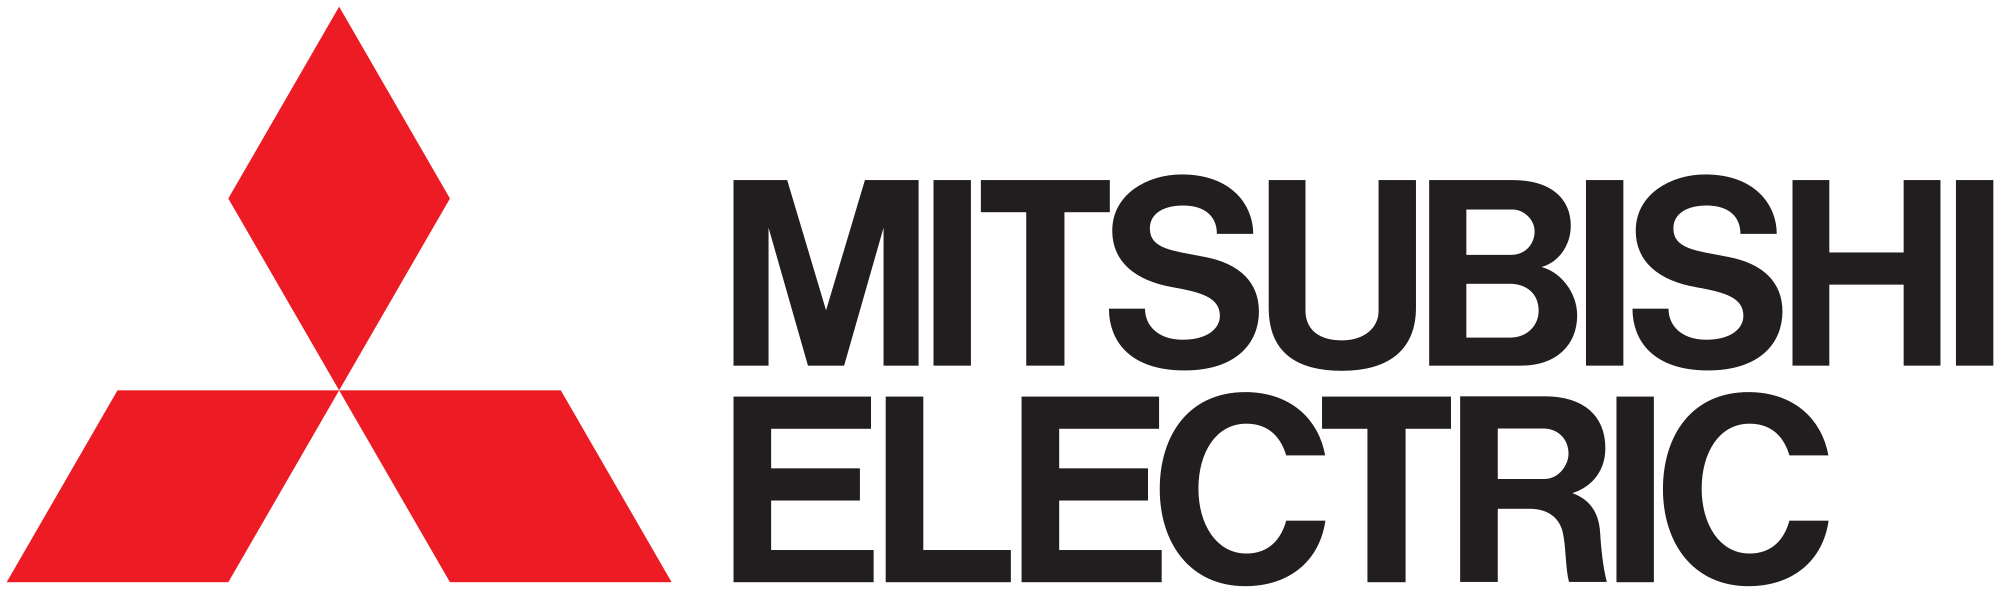 MITSUBISHI ELECTRIC logo.